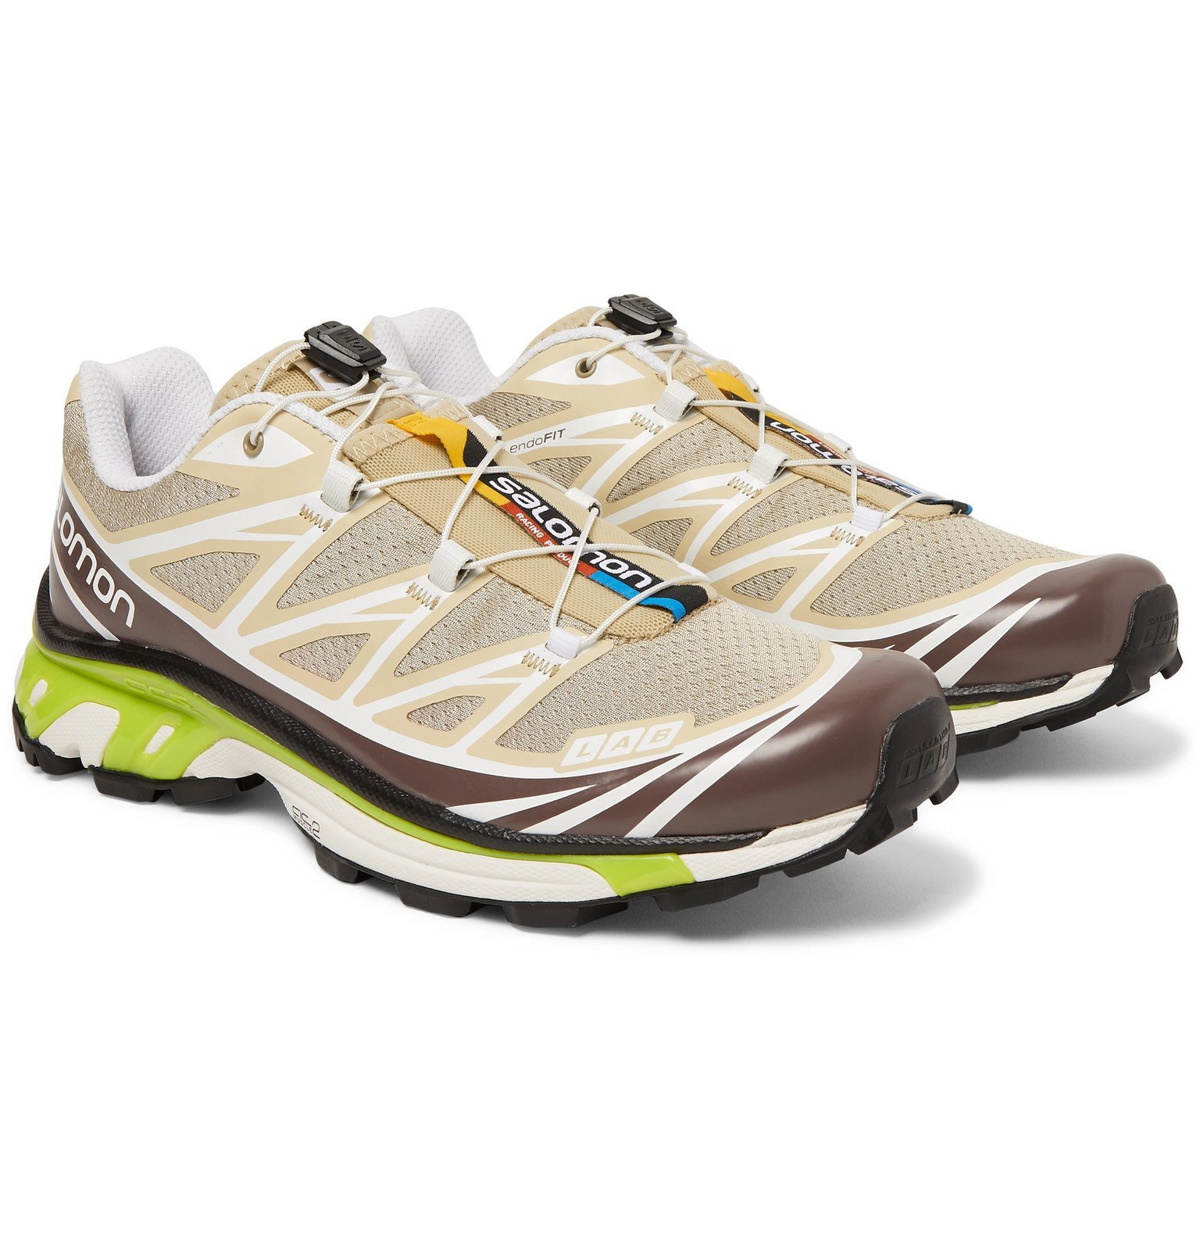 Salomon - S/LAB LT ADV and Rubber Running Sneakers - Brown Salomon